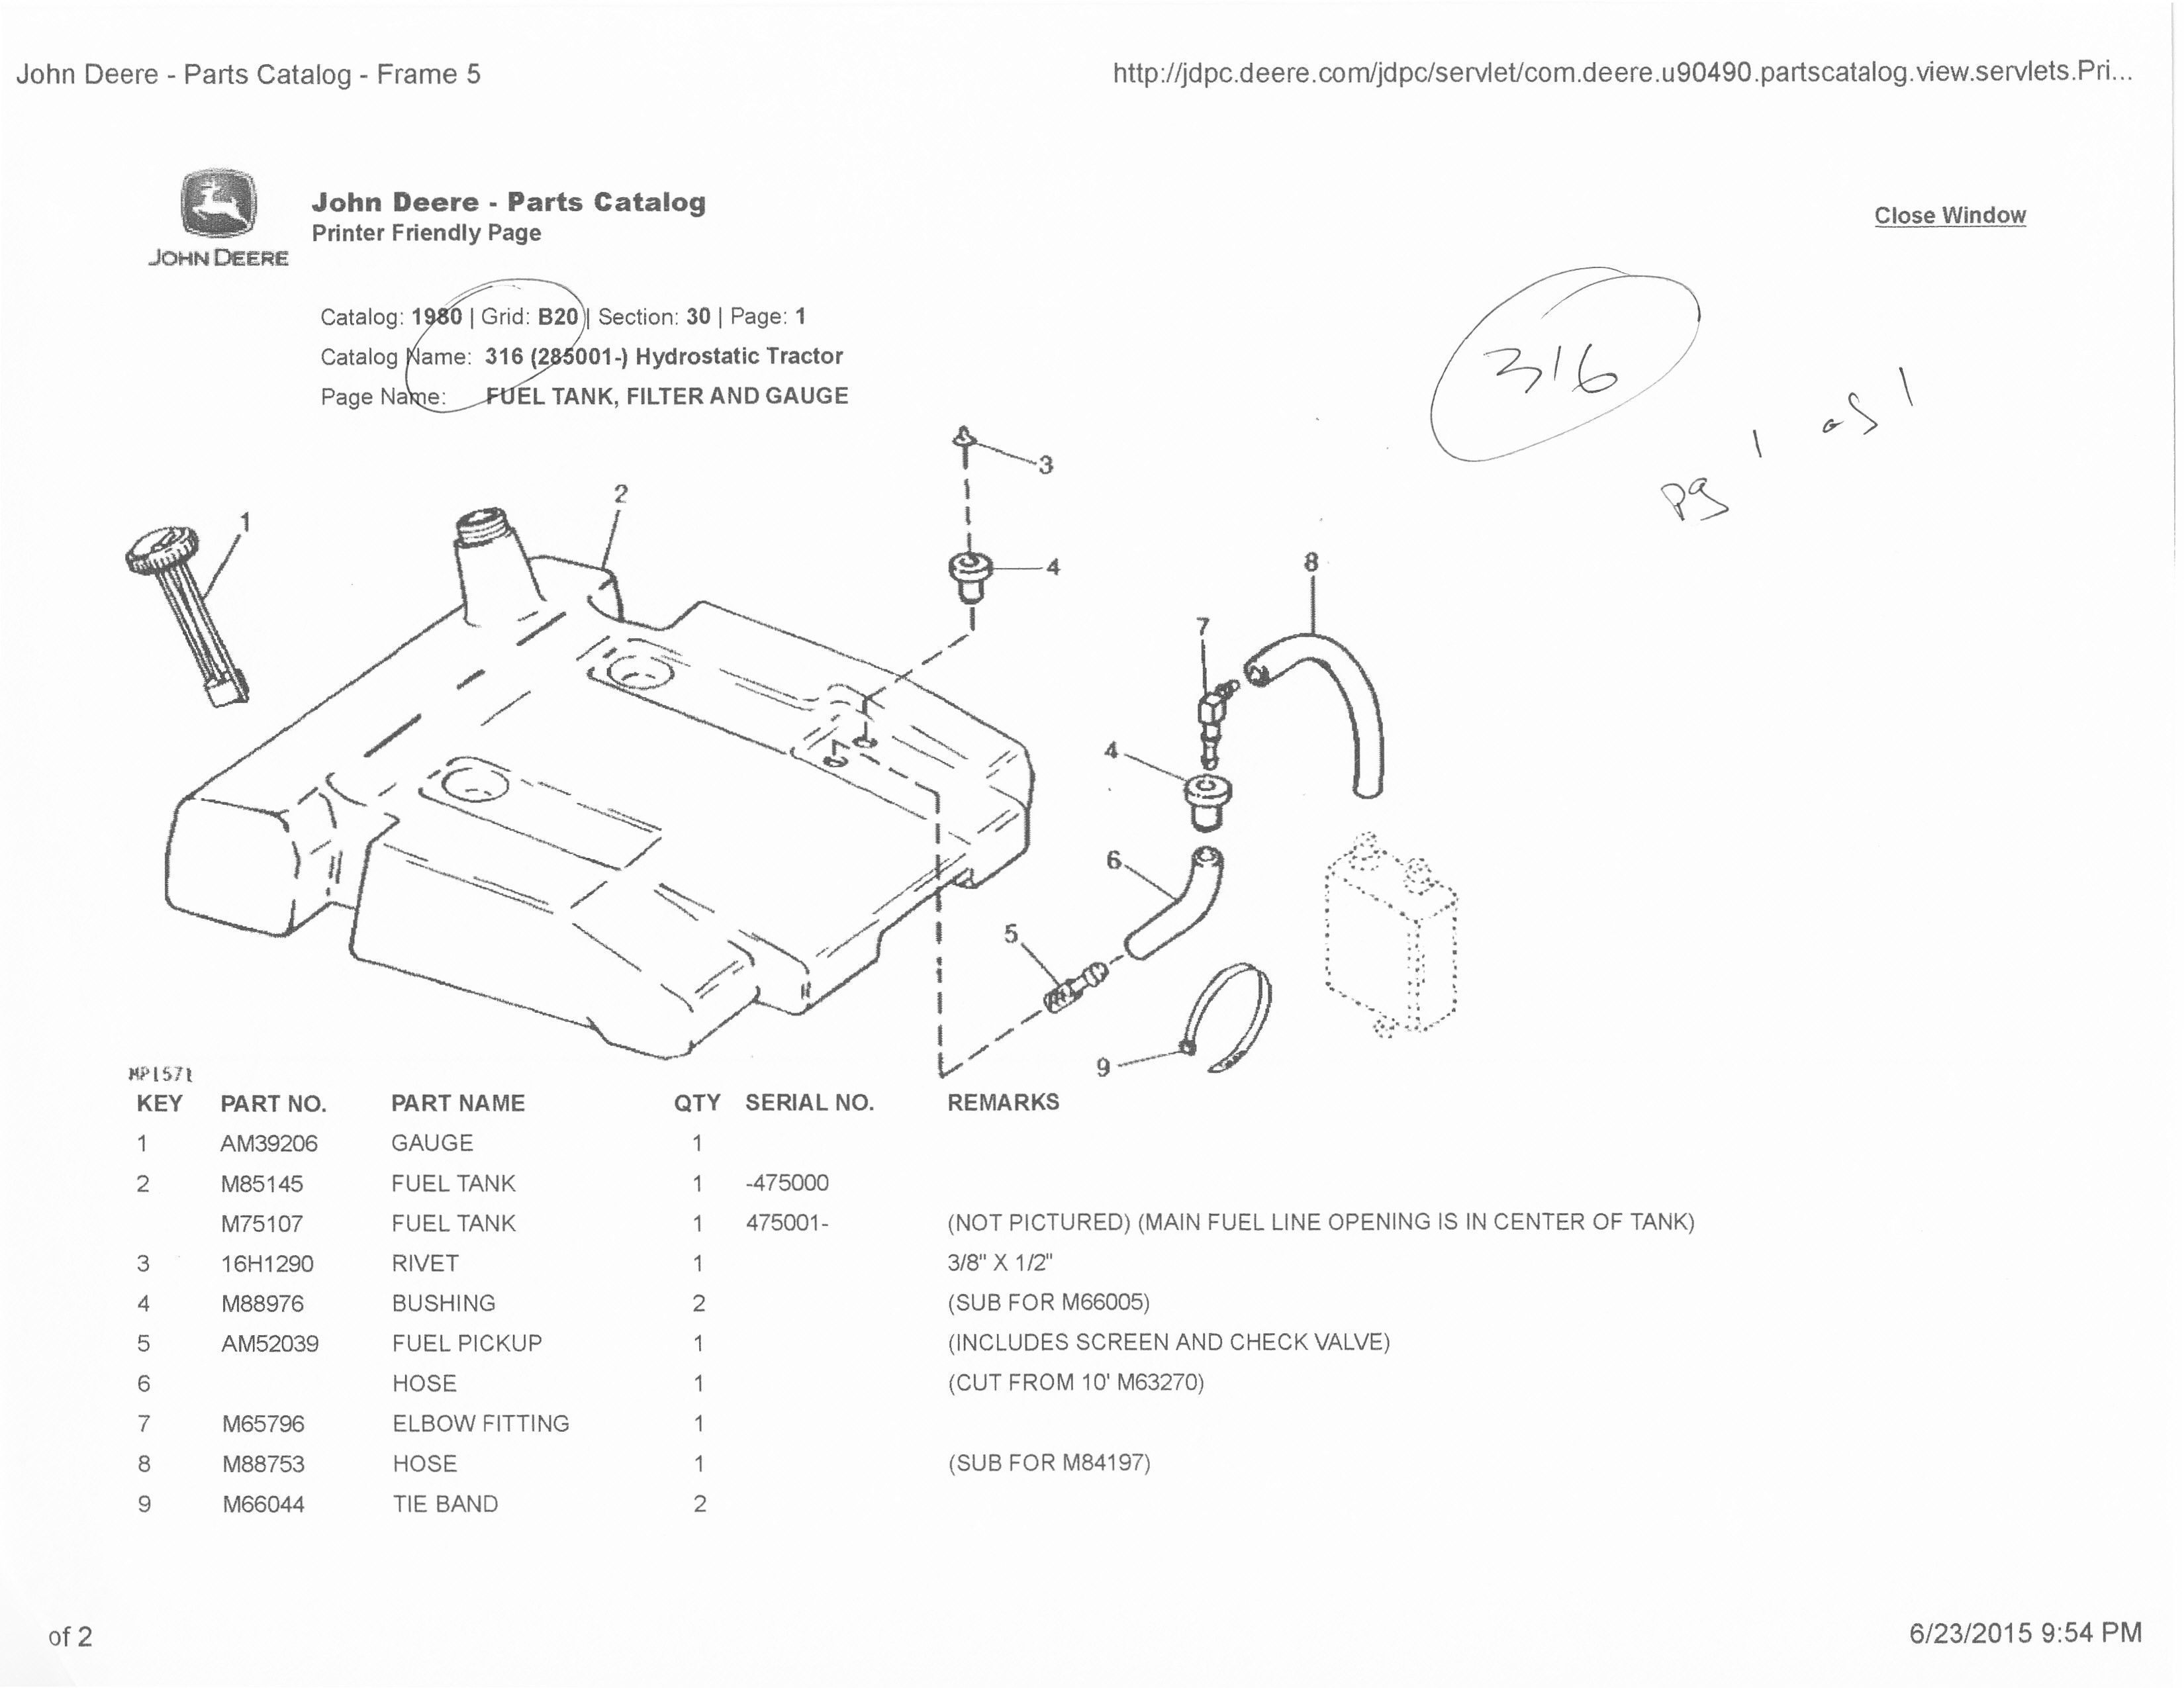 John Deere 318 Diagram Need Help Finding 318 Fuel Tank Parts Of John Deere 318 Diagram